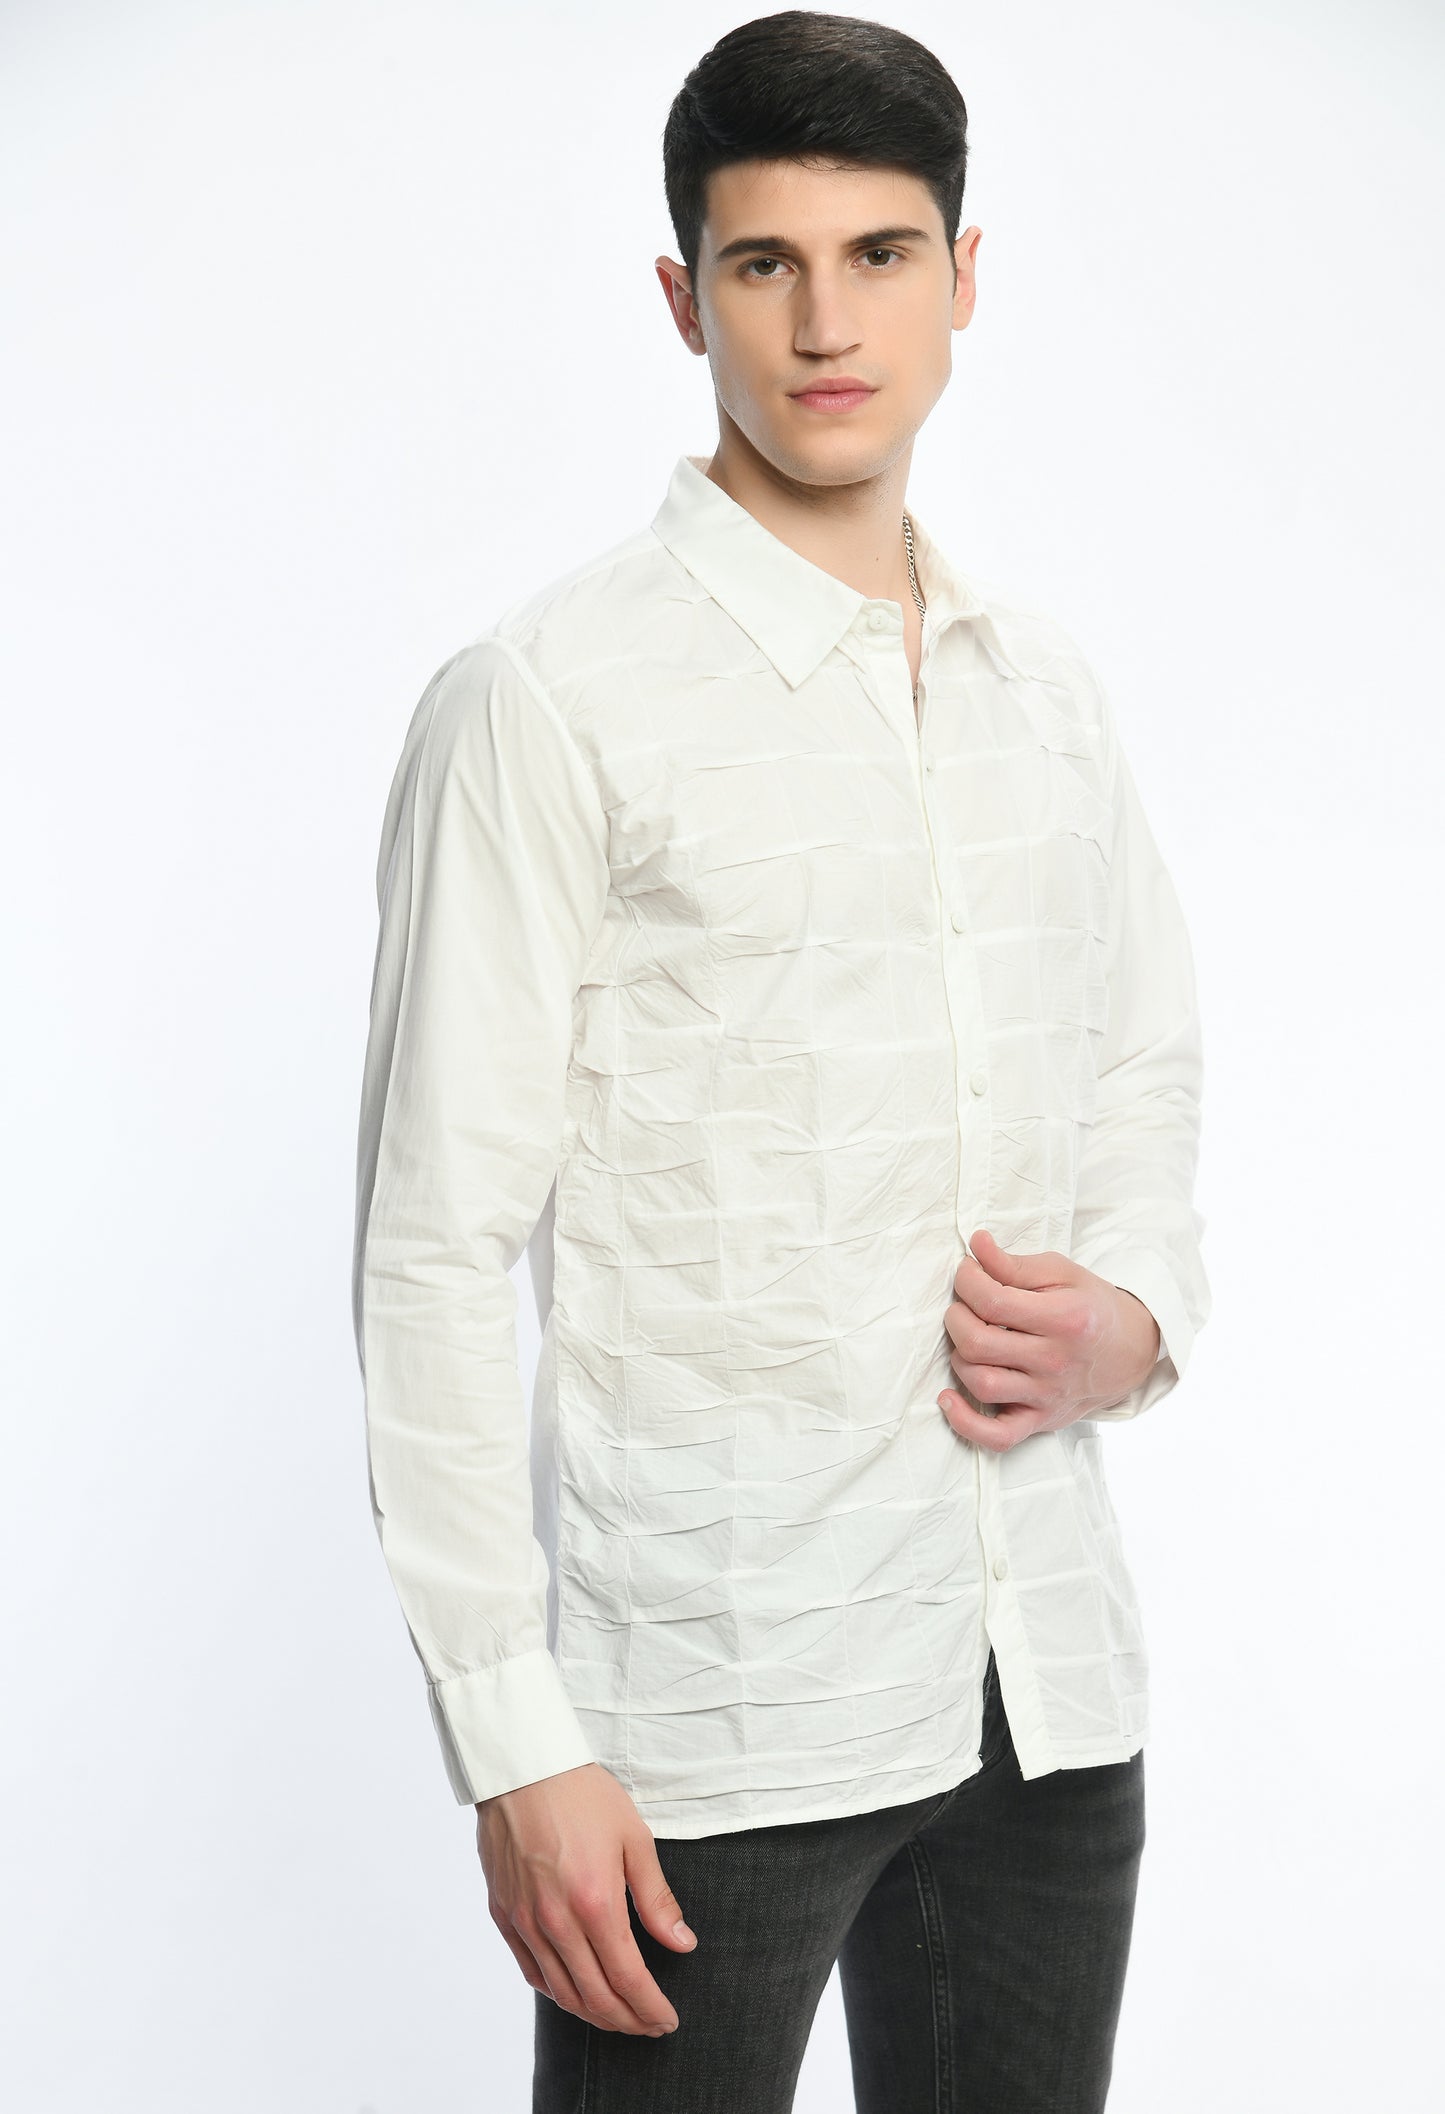 A white cotton shirt showcasing smocking technique